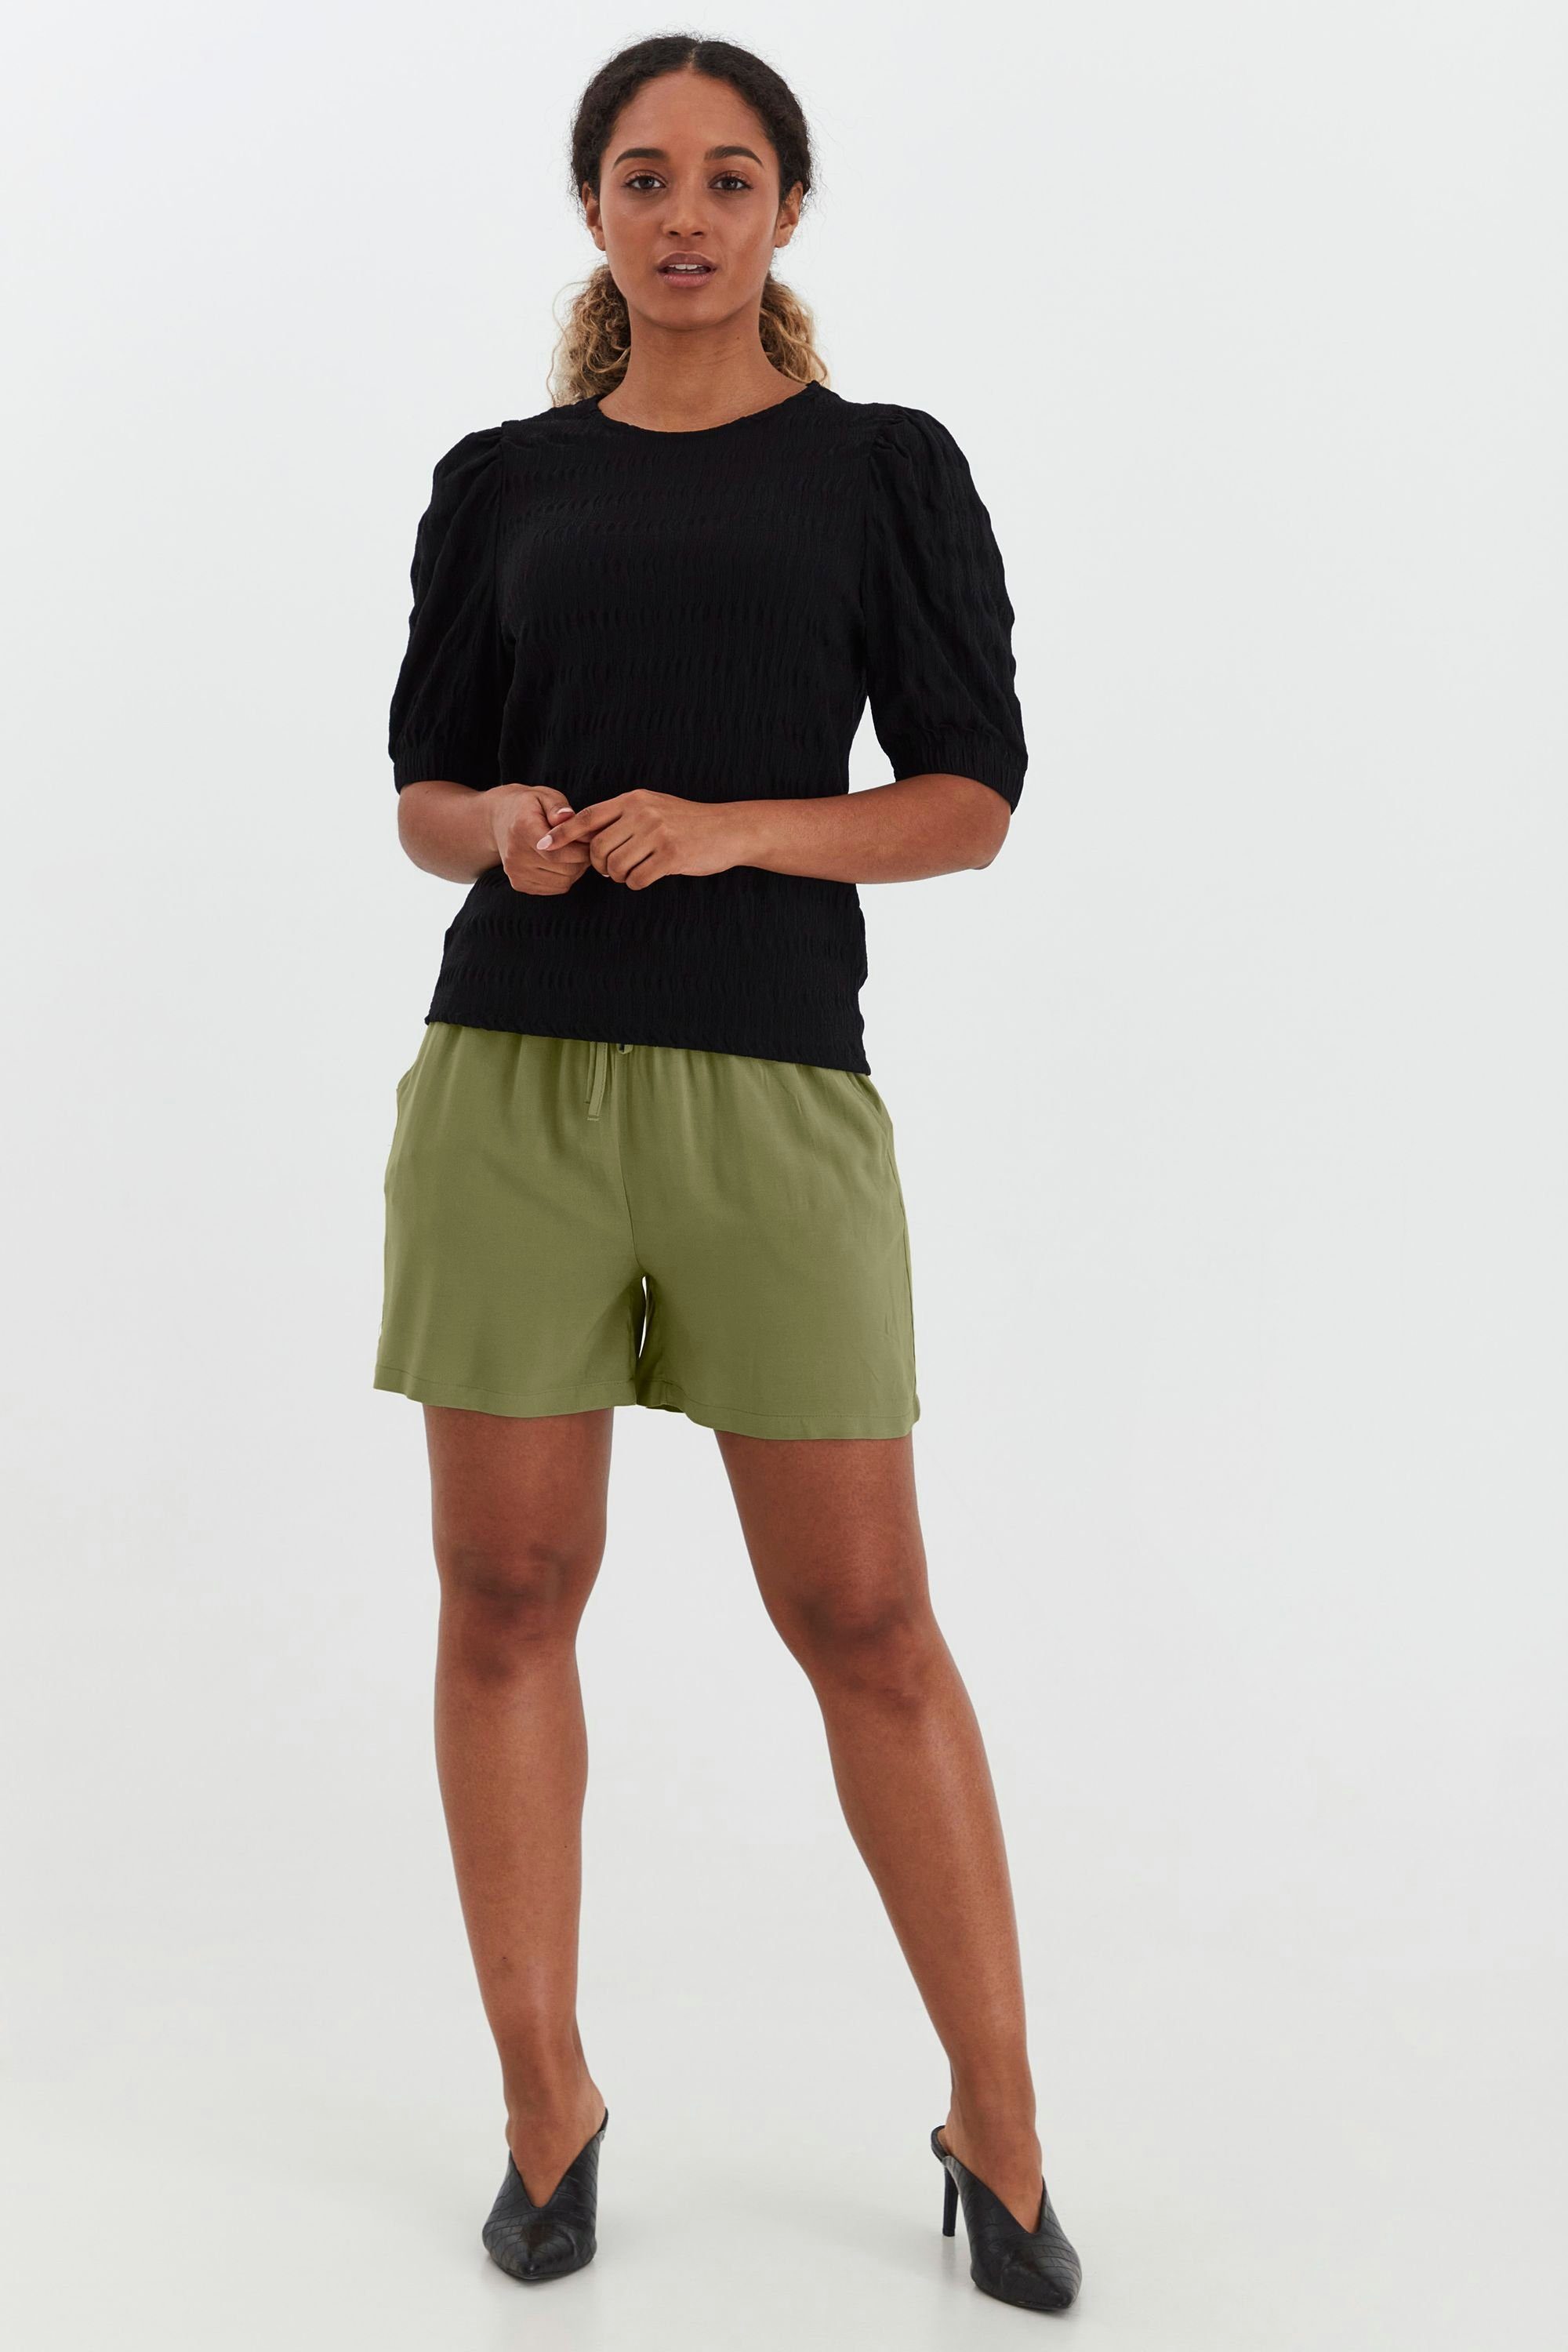 Oil Shorts Green SHORTS Shorts - BYMMJOELLA (170115) Muster 20809730 Luftige b.young mit